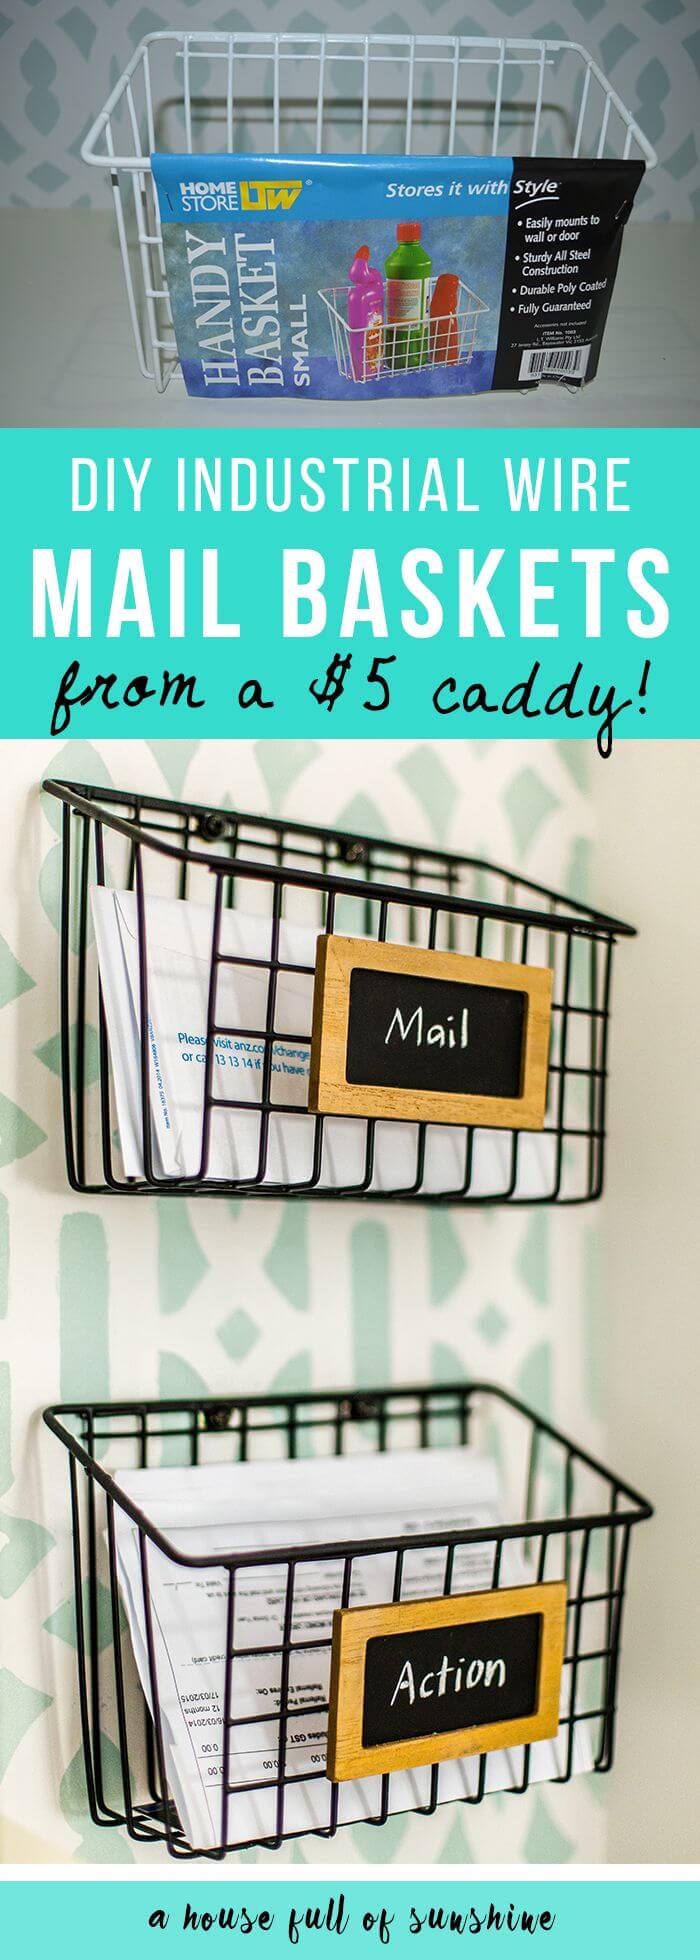 $5 DIY Mail Sorting Baskets